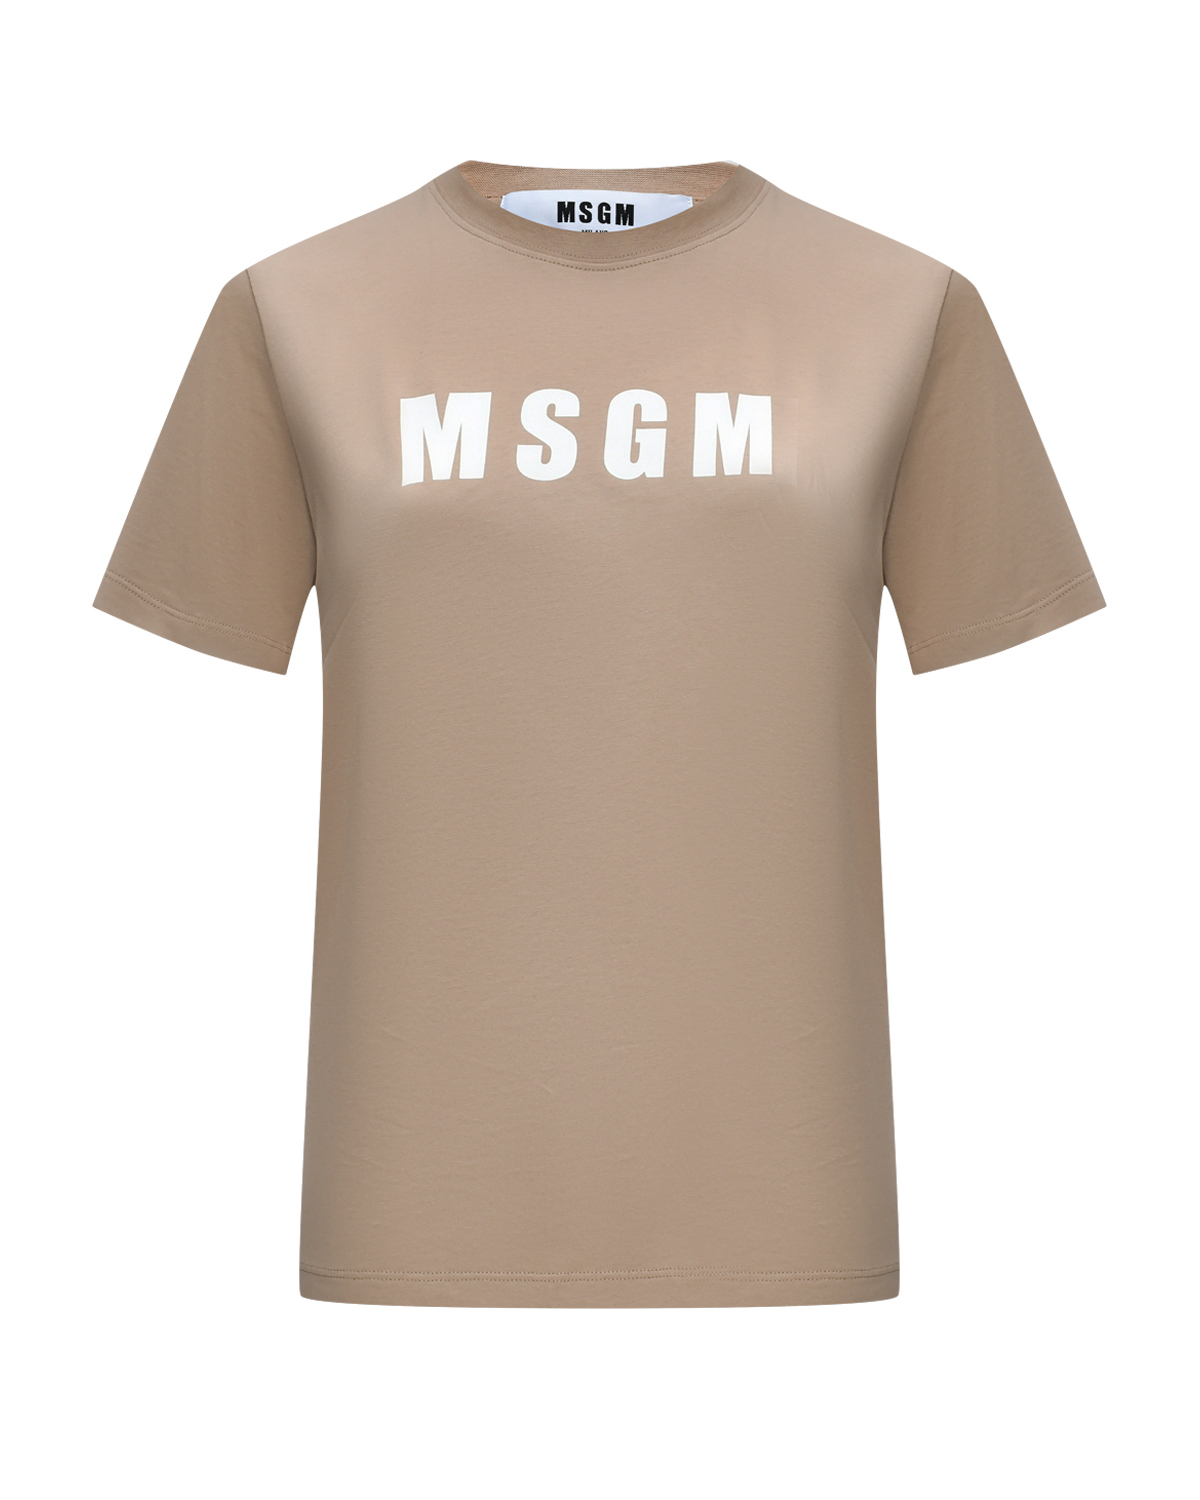 Базовая футболка с лого MSGM футболка мужская базовая бежевая с черной линией на манжетах